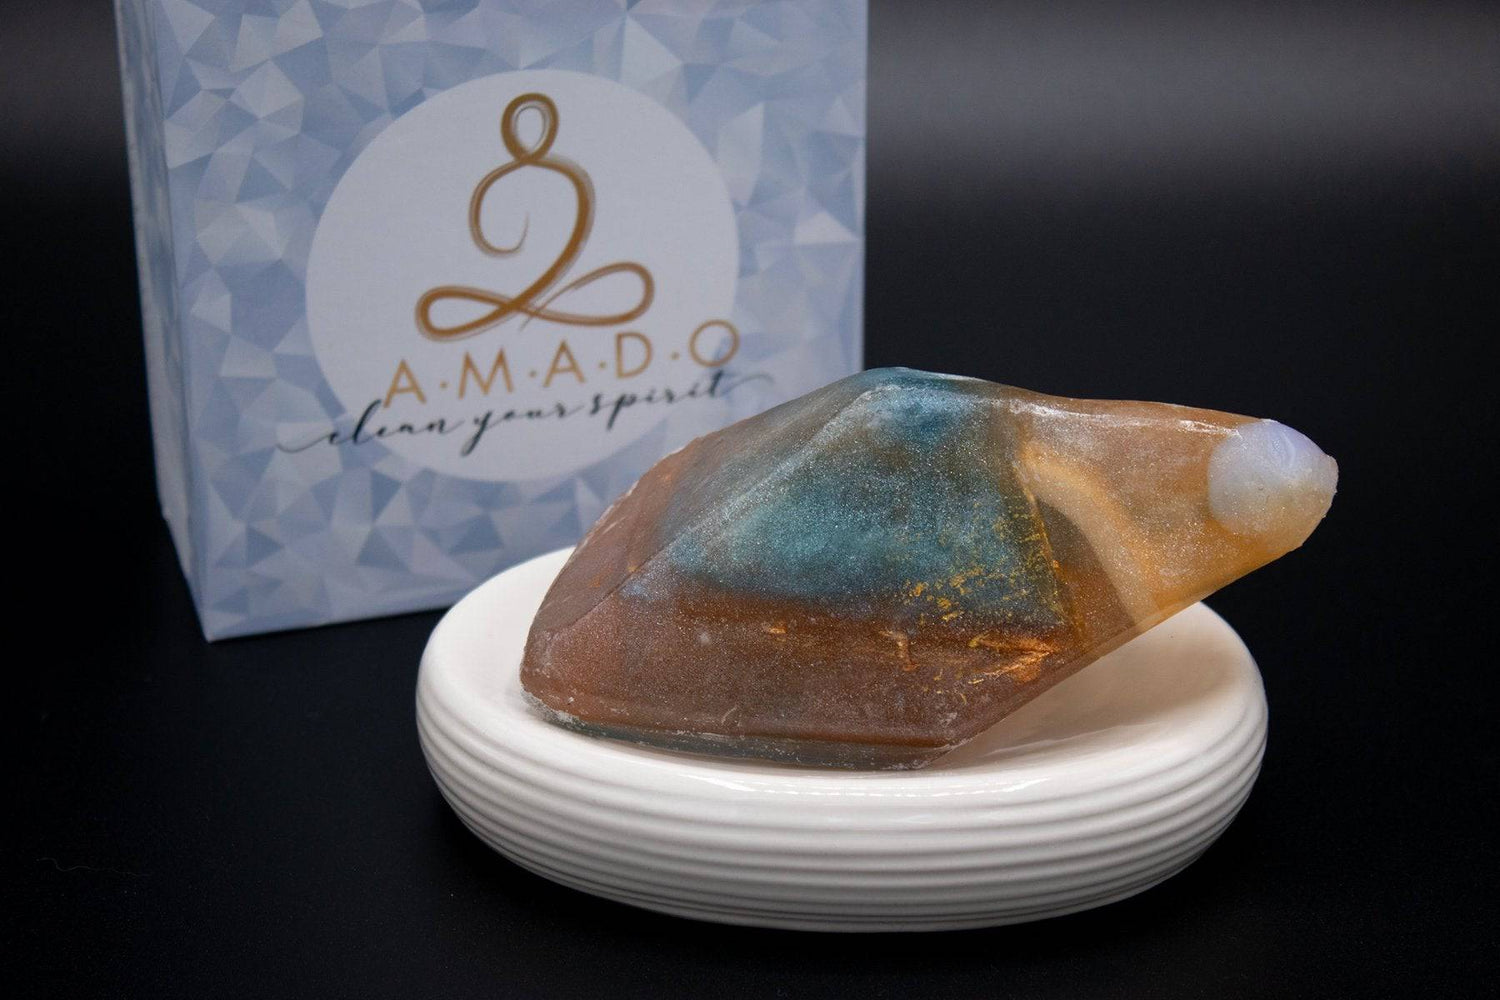 AMADO Edelsteinseife / Kristallseife „Lapislazuli“ - ein besonderes Geschenk - 150g - AMADO-SelfCare